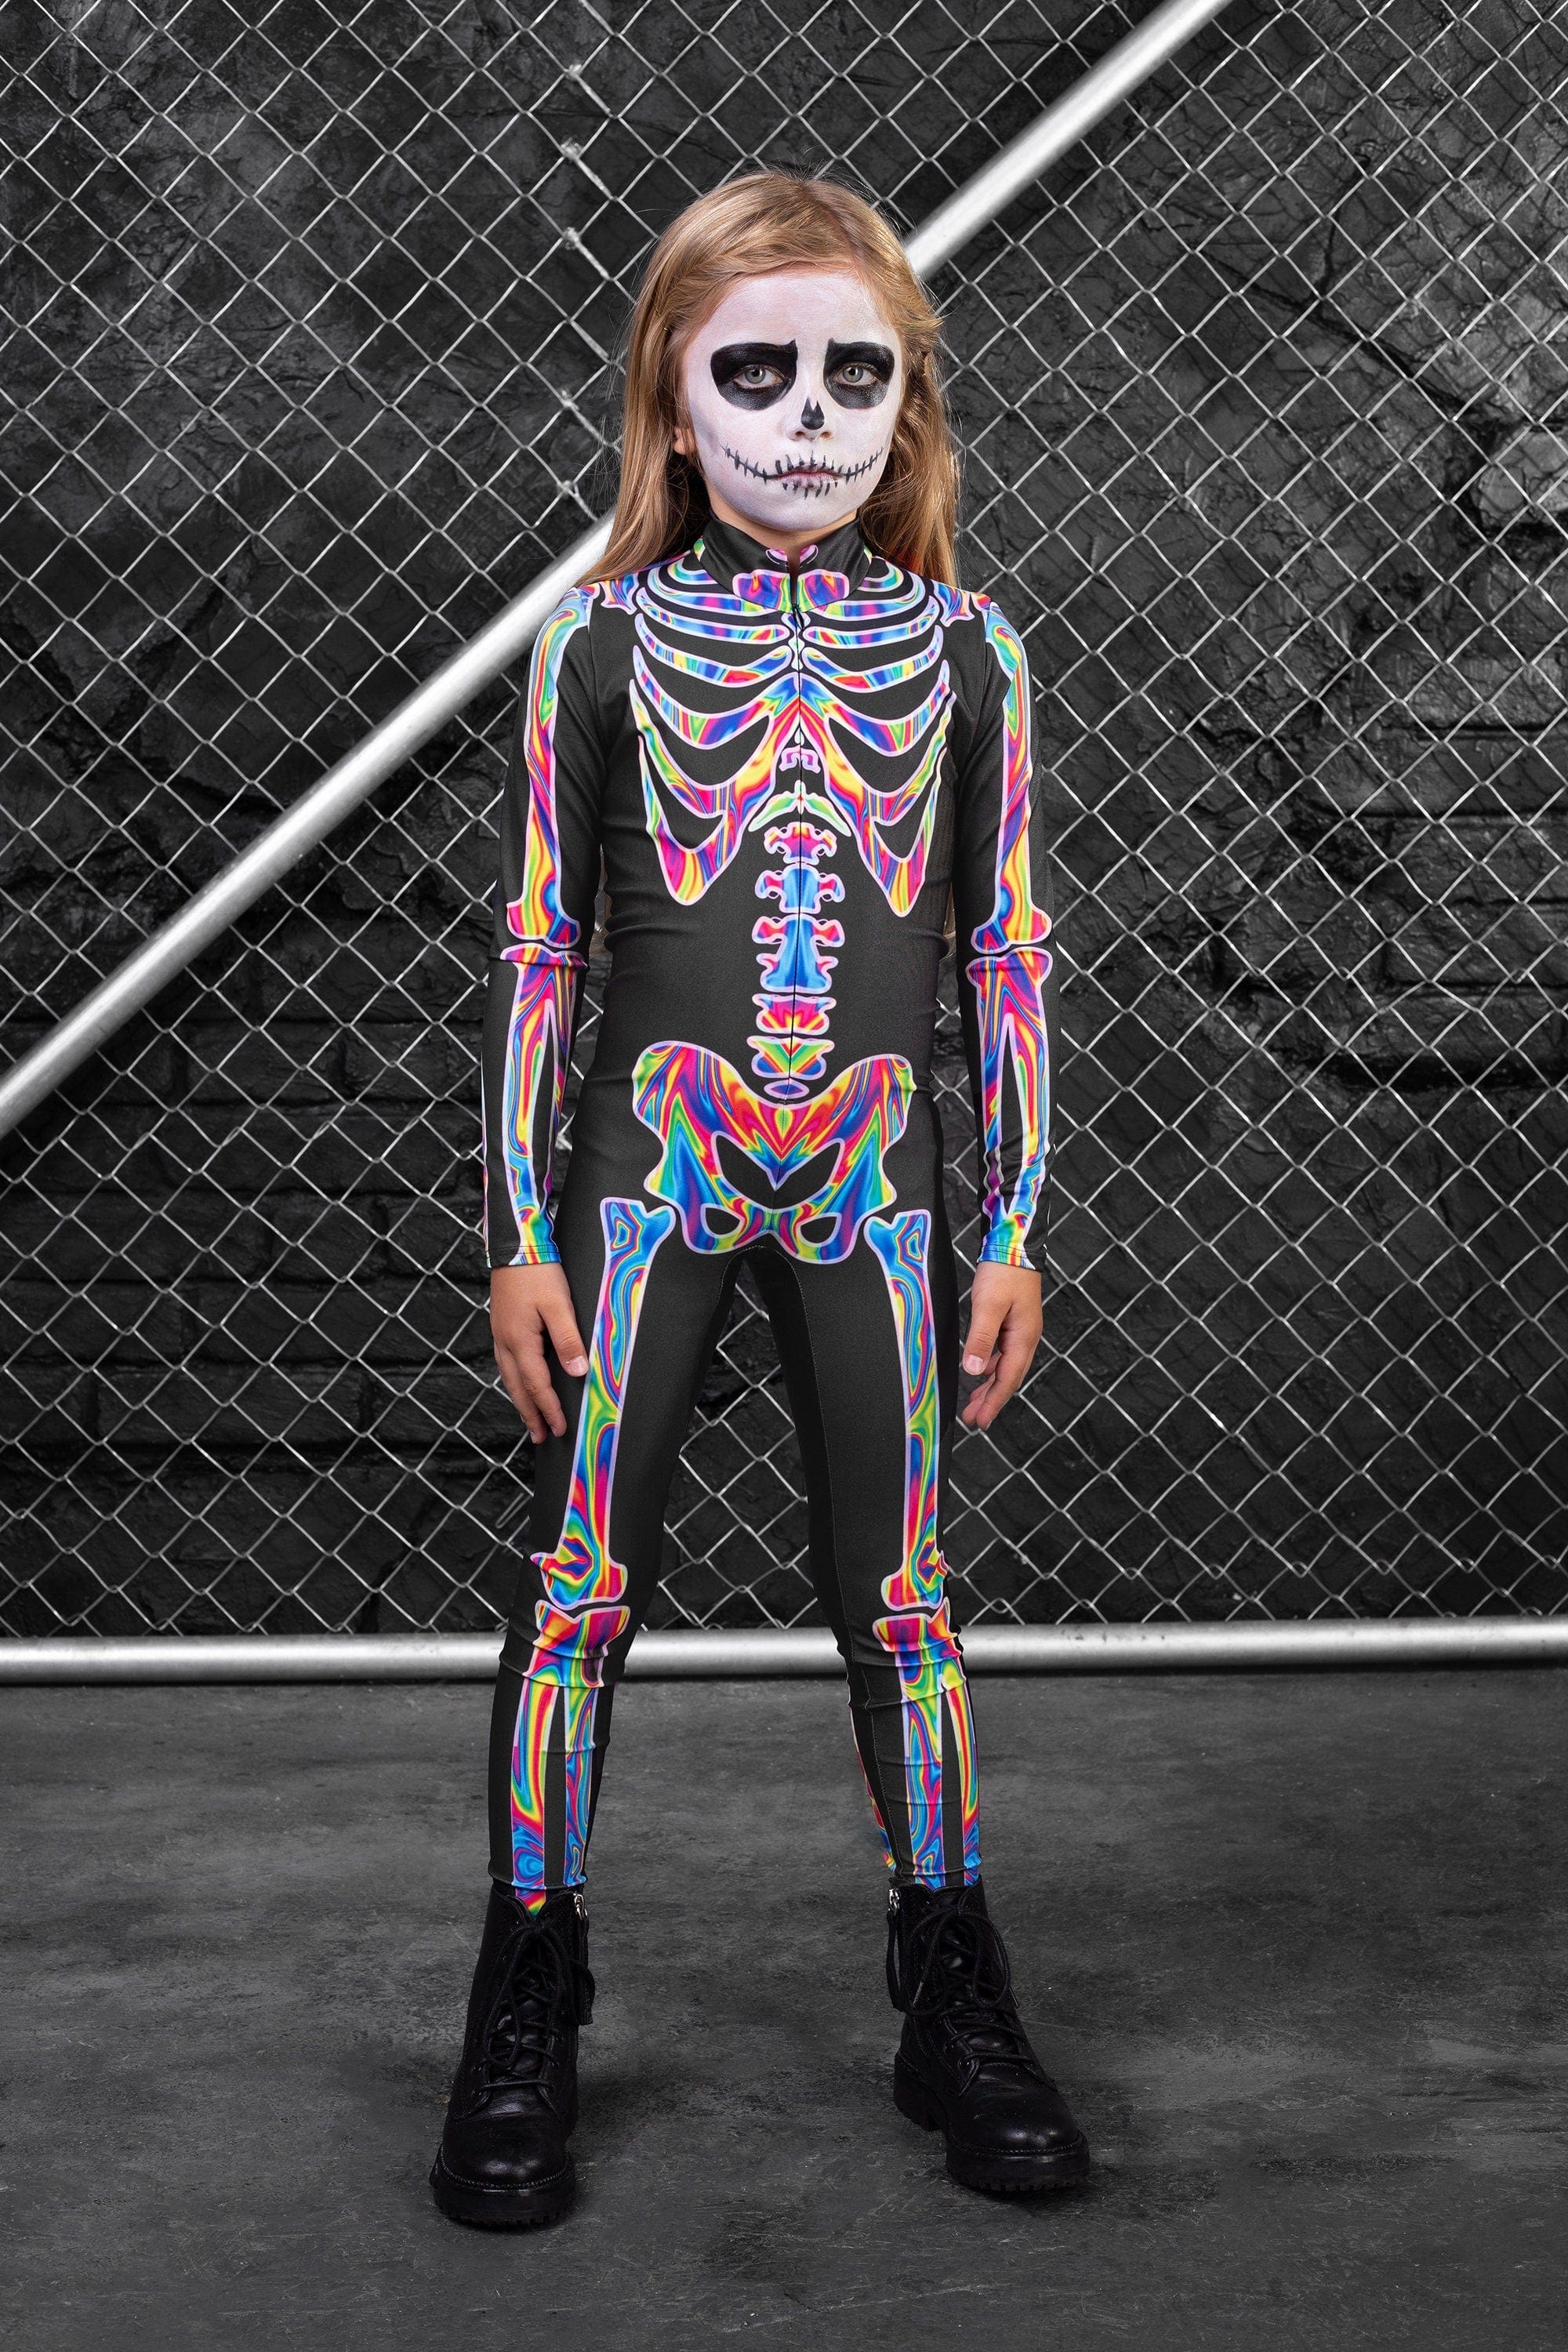 Girl's Rainbow Skeleton Costume